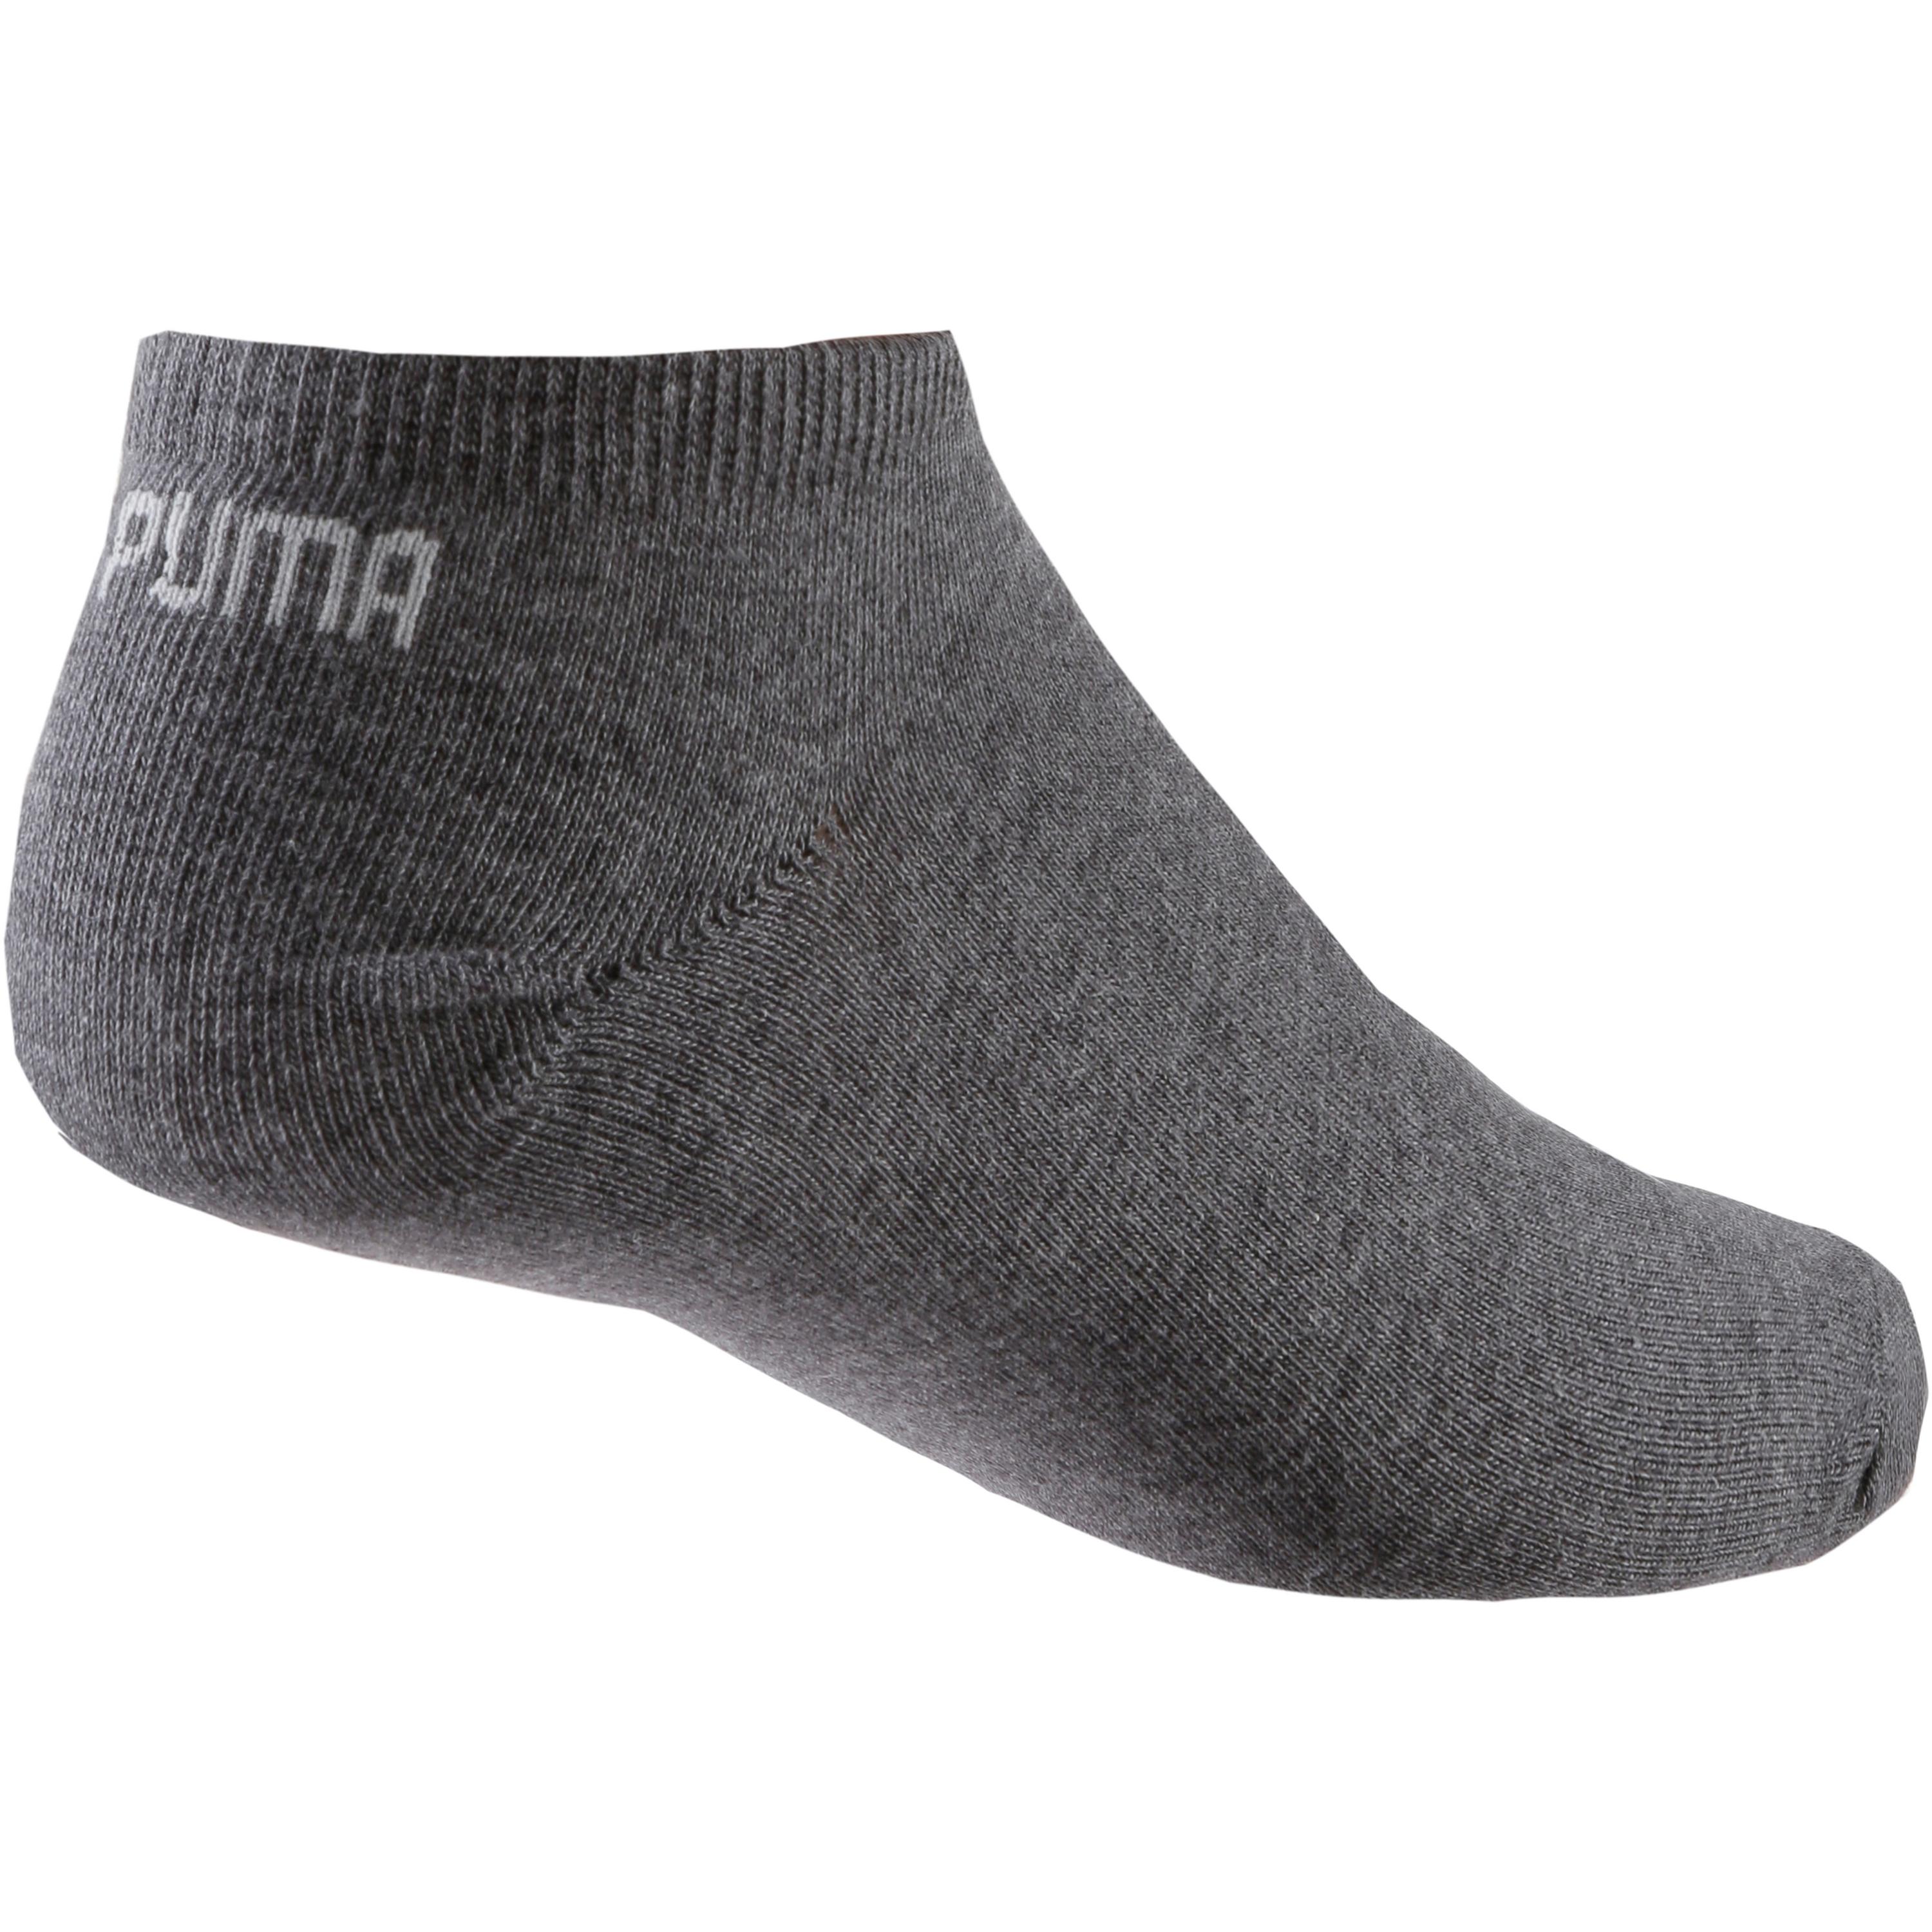 PUMA Socken in Grau, Hellgrau, Dunkelgrau 